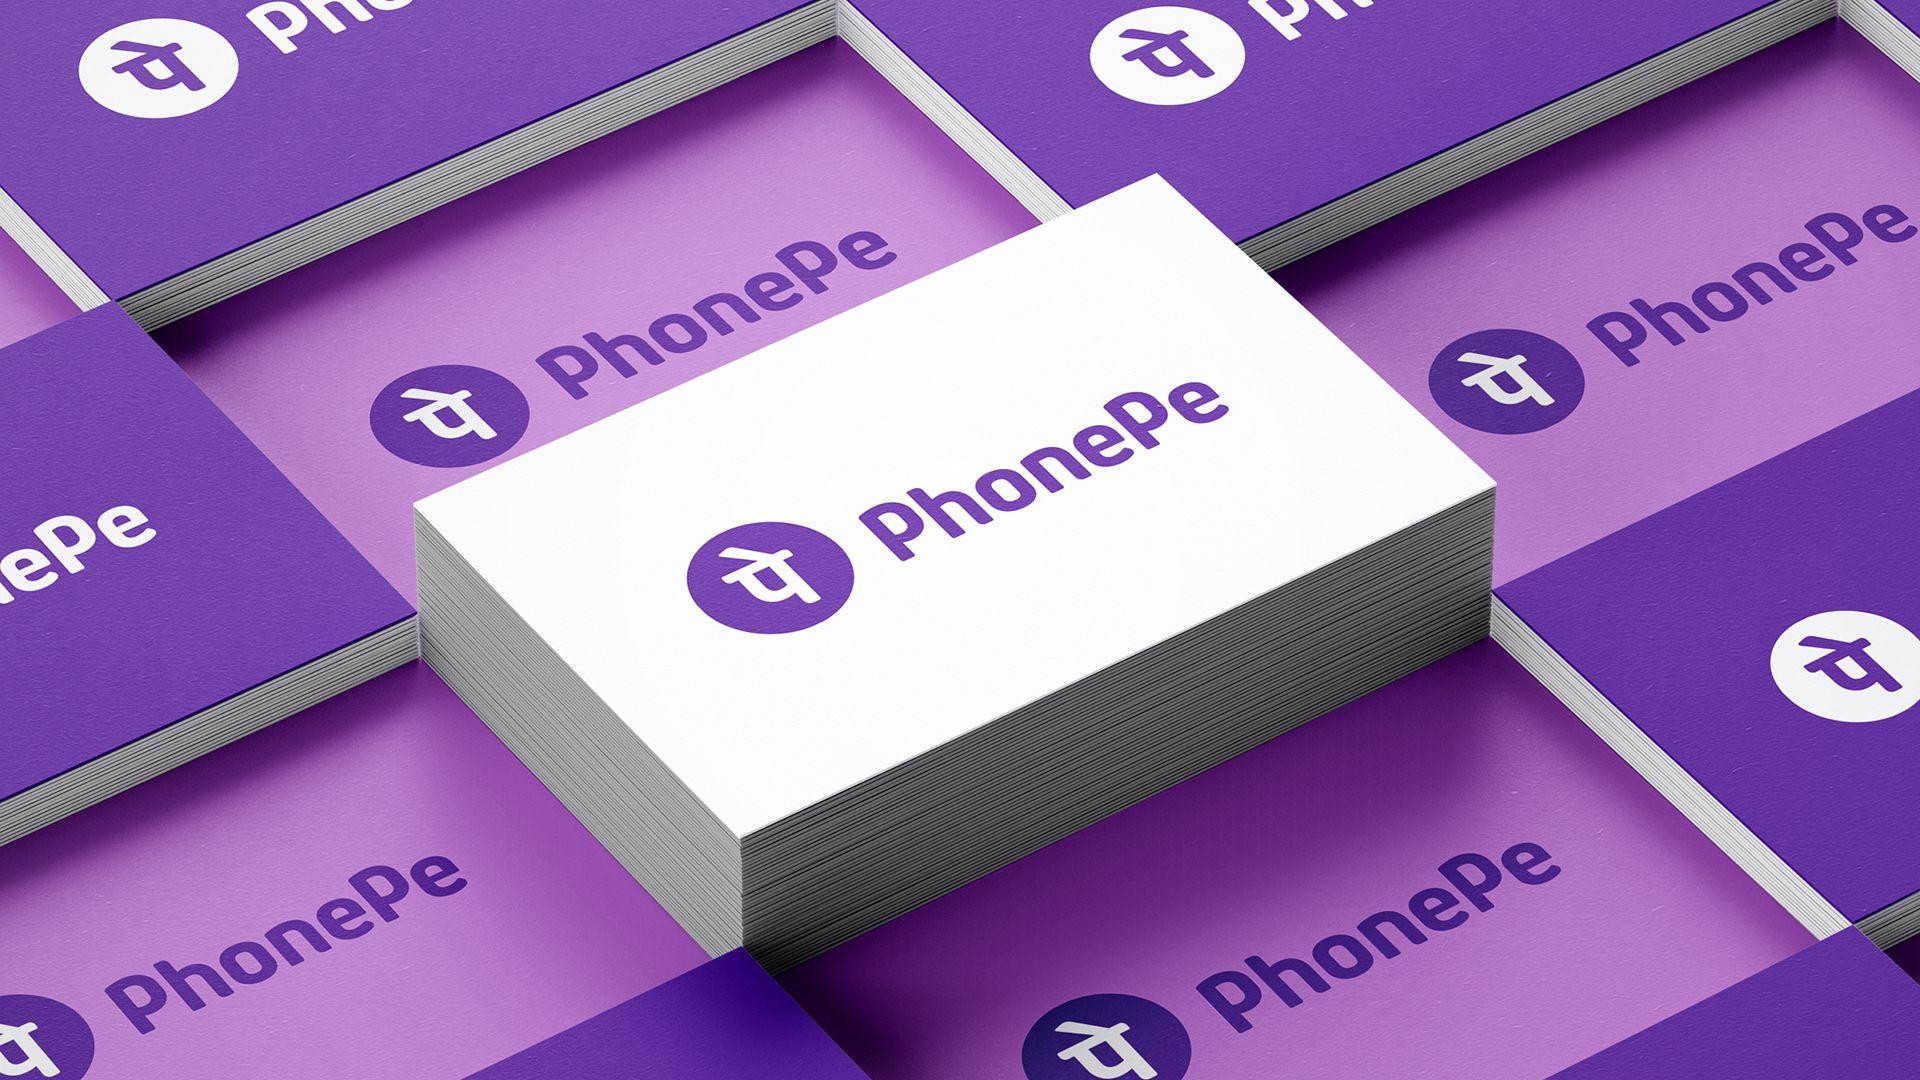 PhonePe Logo - PhonePe Raises Another $100 Million ...